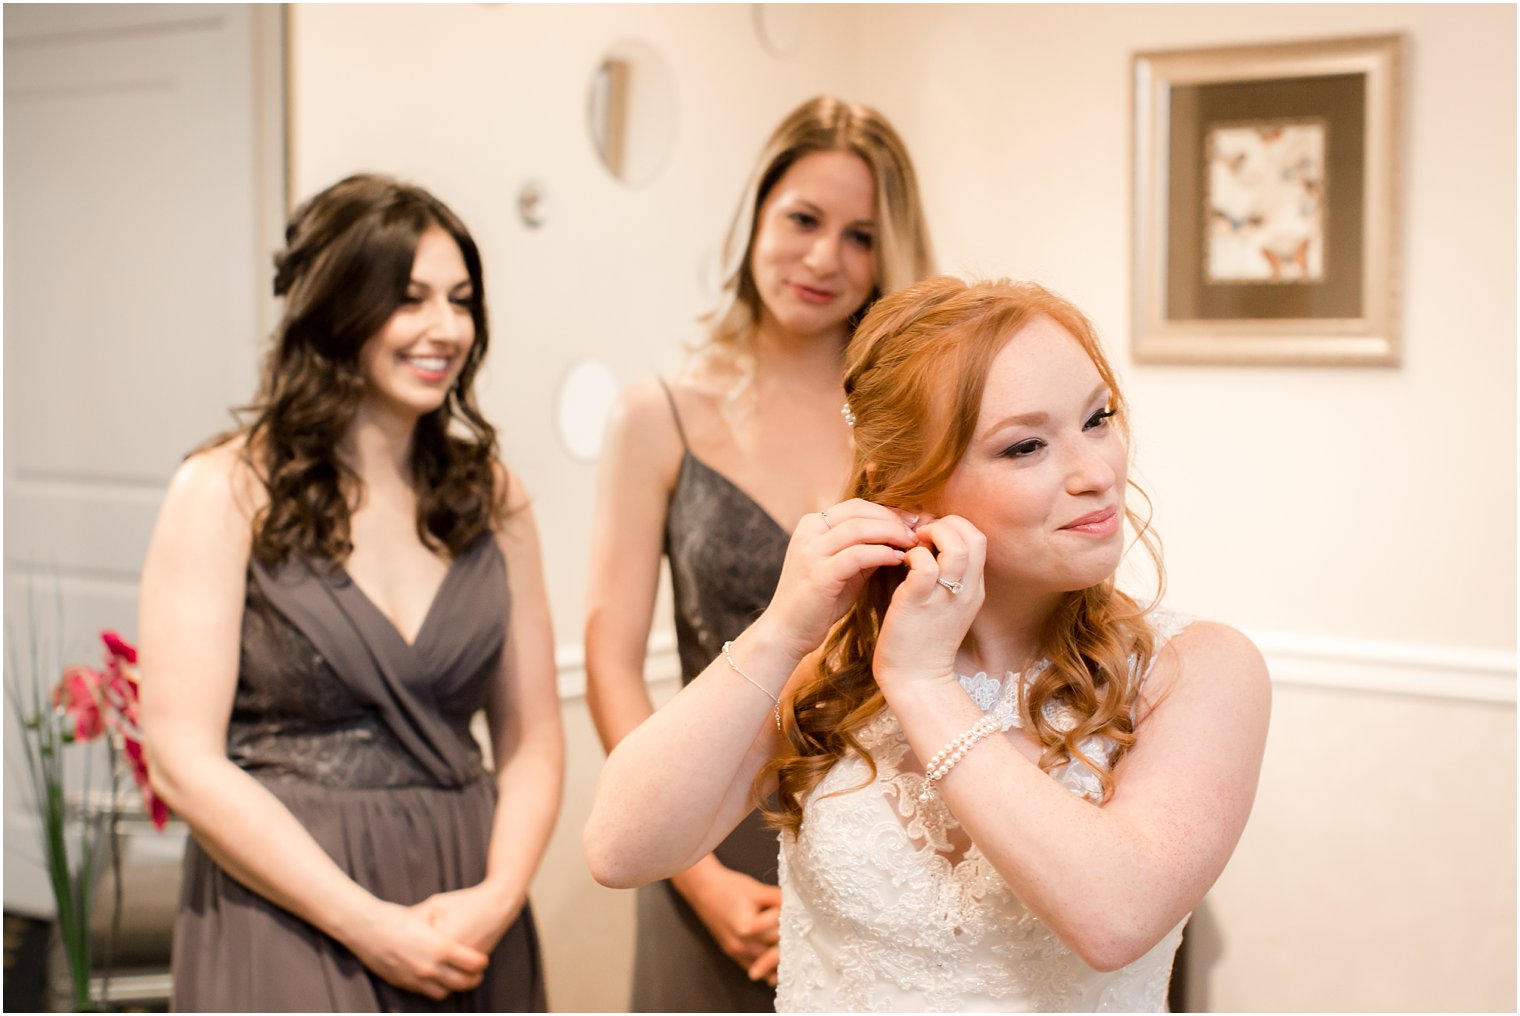 Wedding prep at Wilshire Grand Hotel | Photos by Idalia Photography